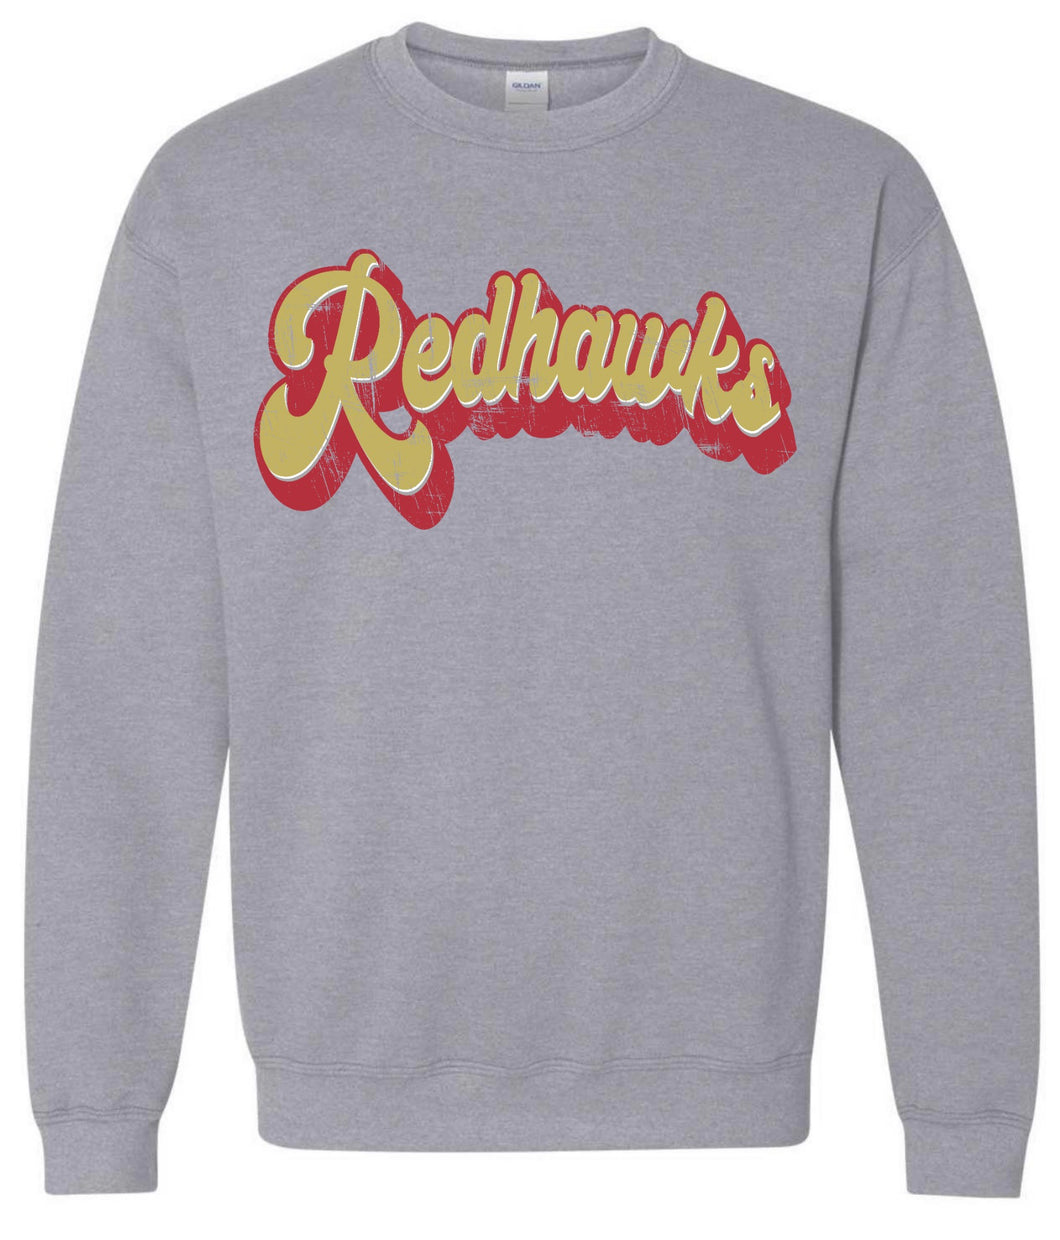 Distressed Retro Redhawks Sweatshirt